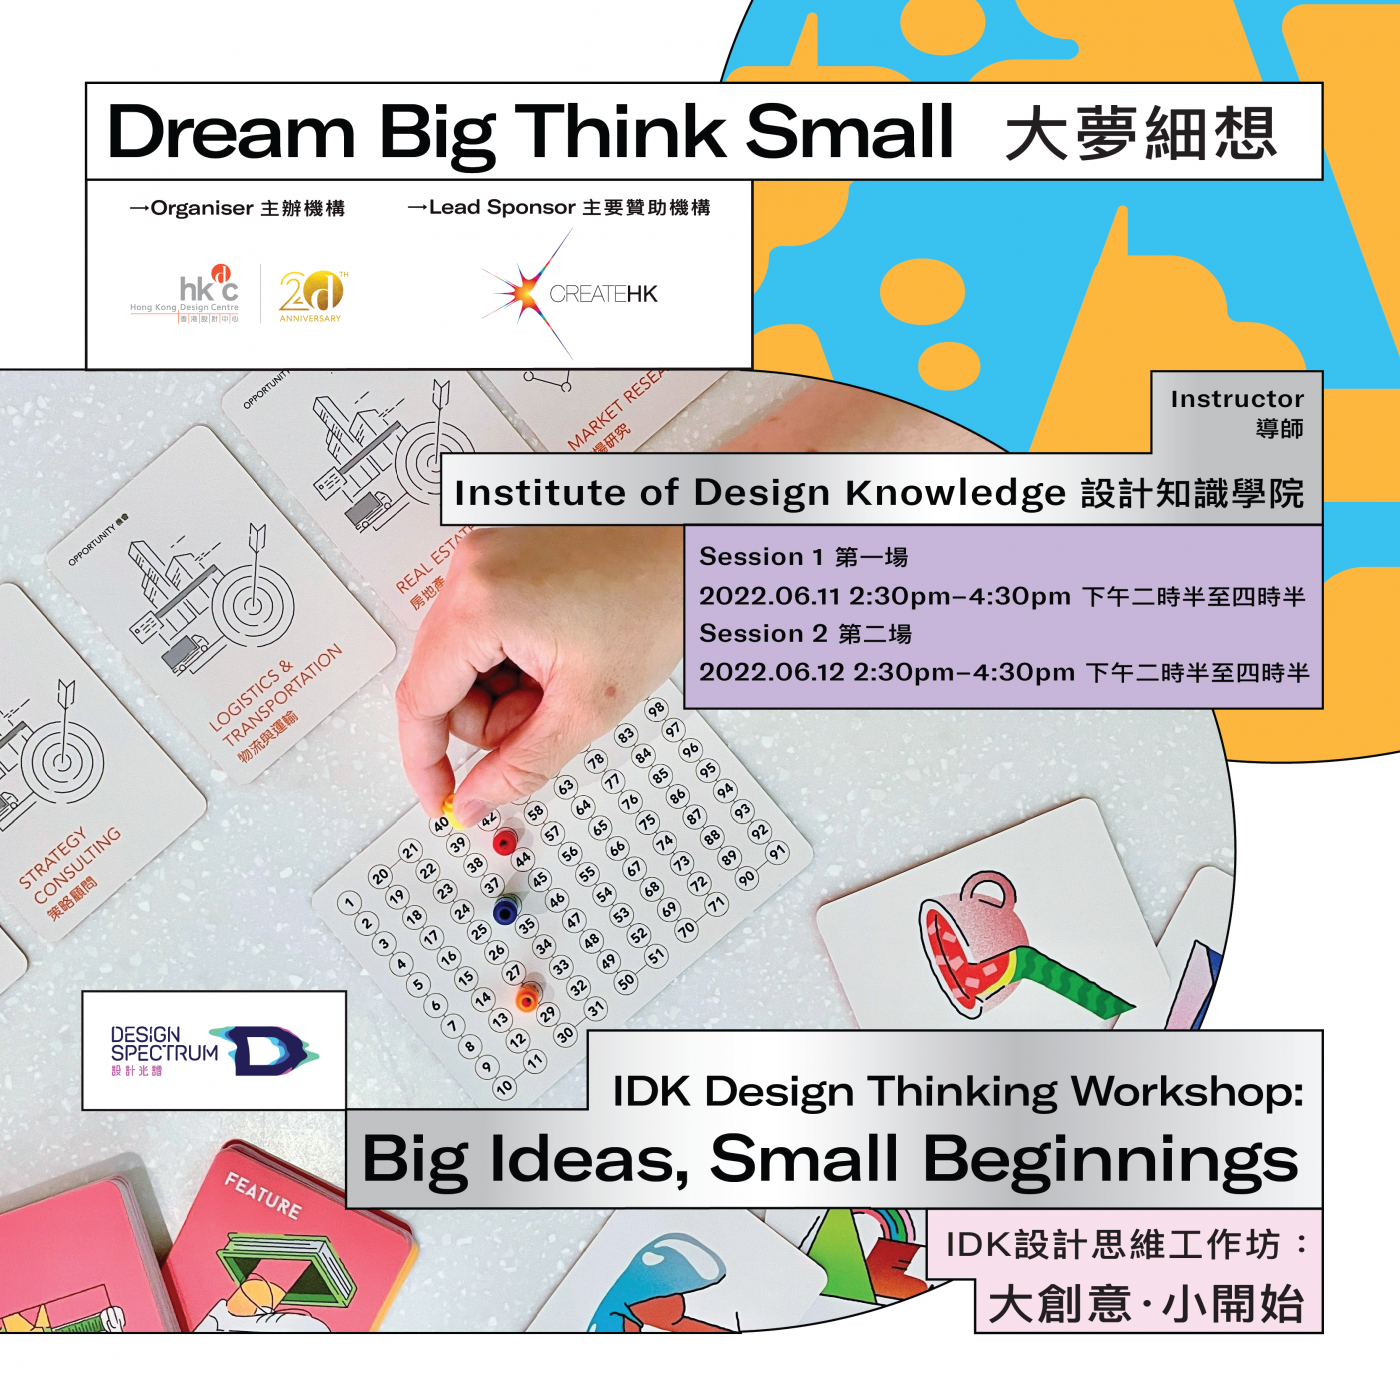 Design Spectrumidk-design-thinking-workshop-big-ideas-small-beginnings